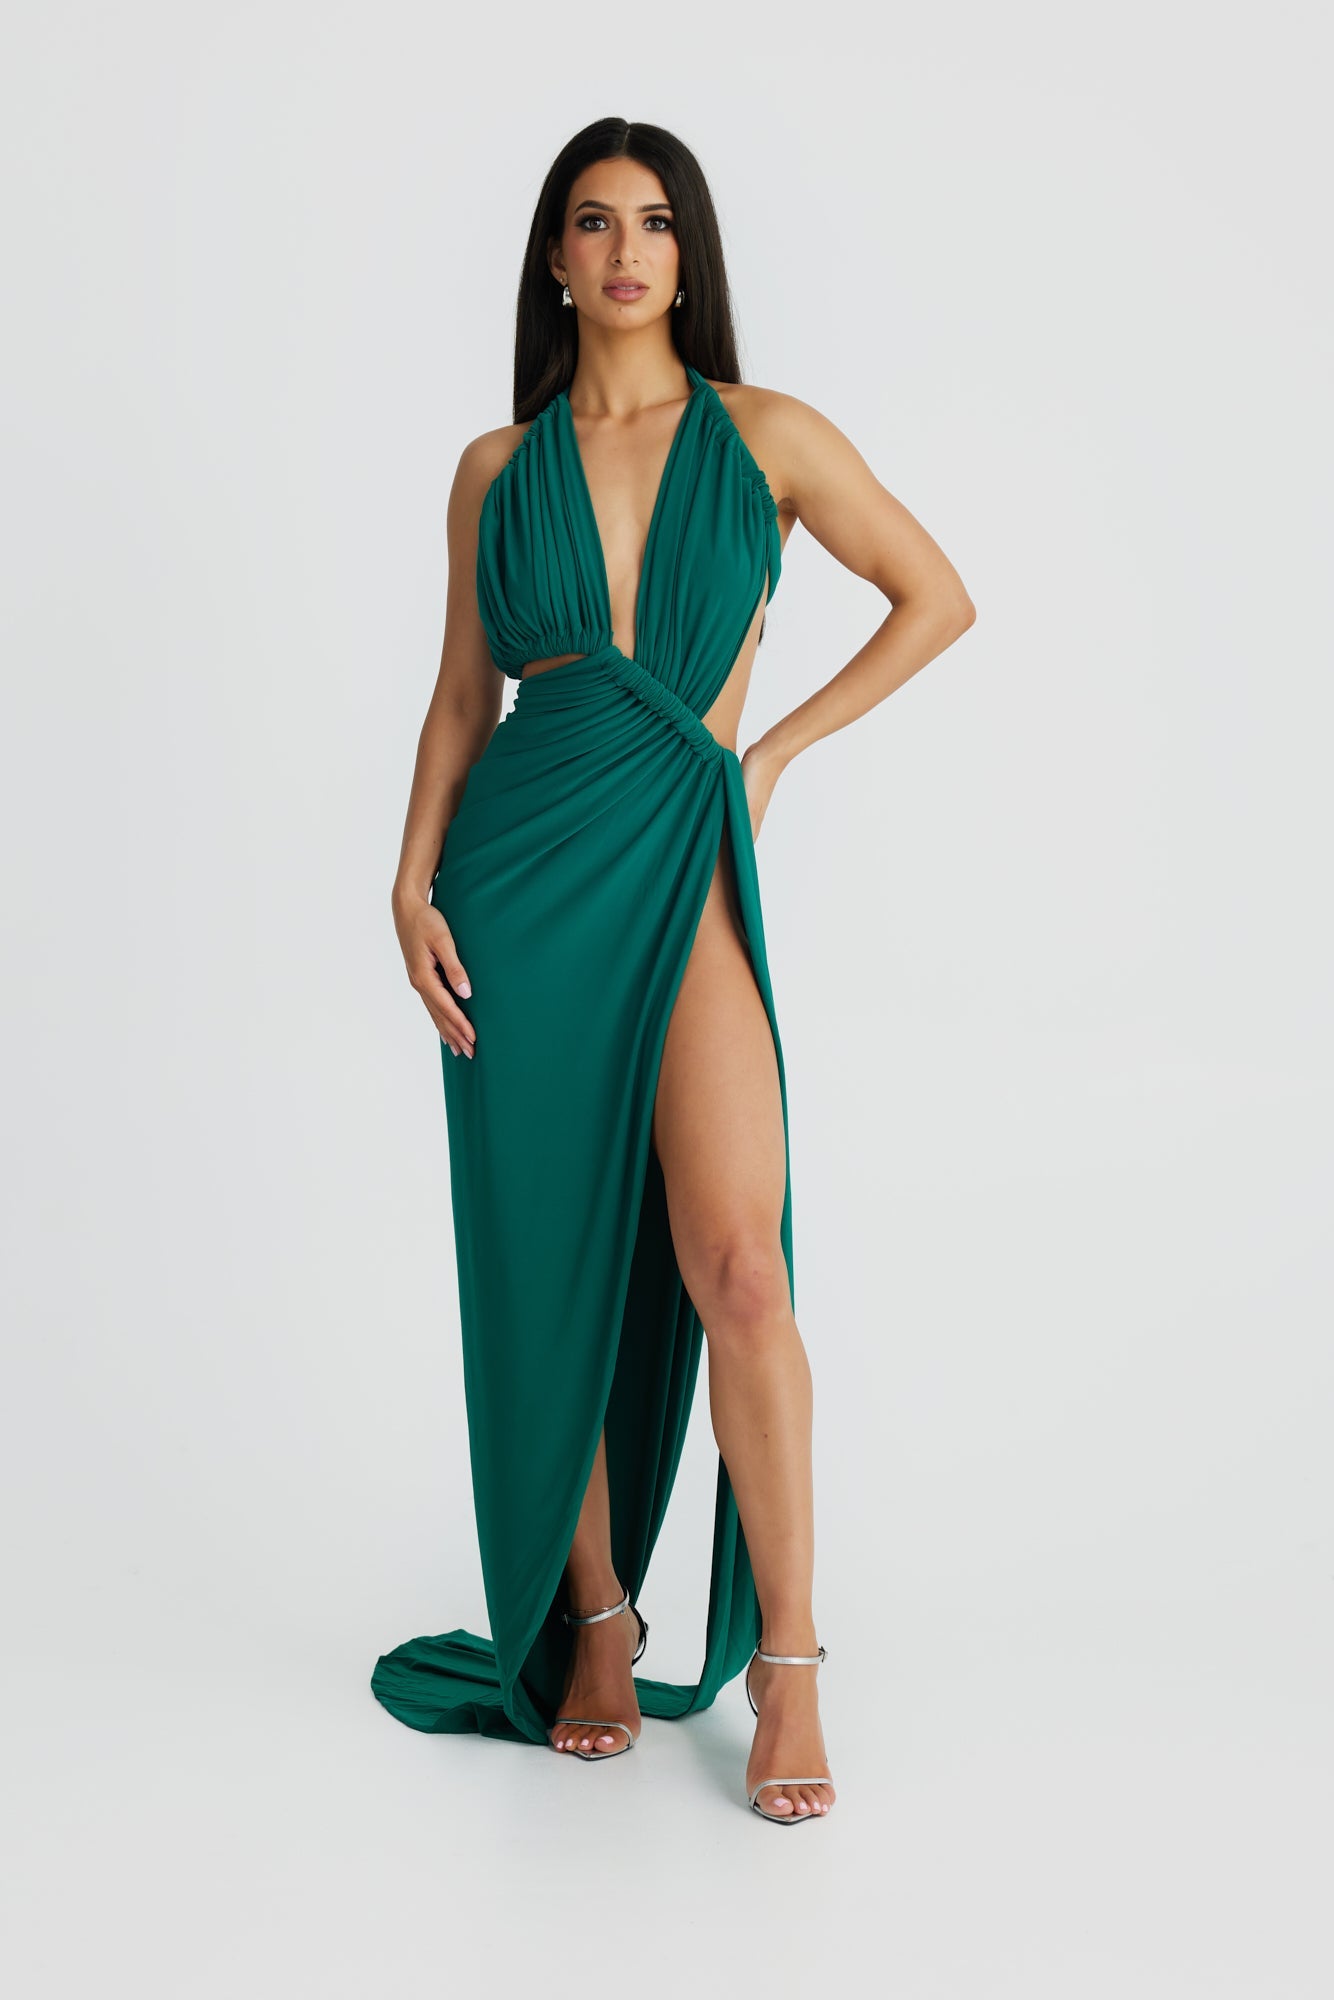 MÉLANI The Label KAILANI Emerald Cut Out Leg Split Form Fitted Dress